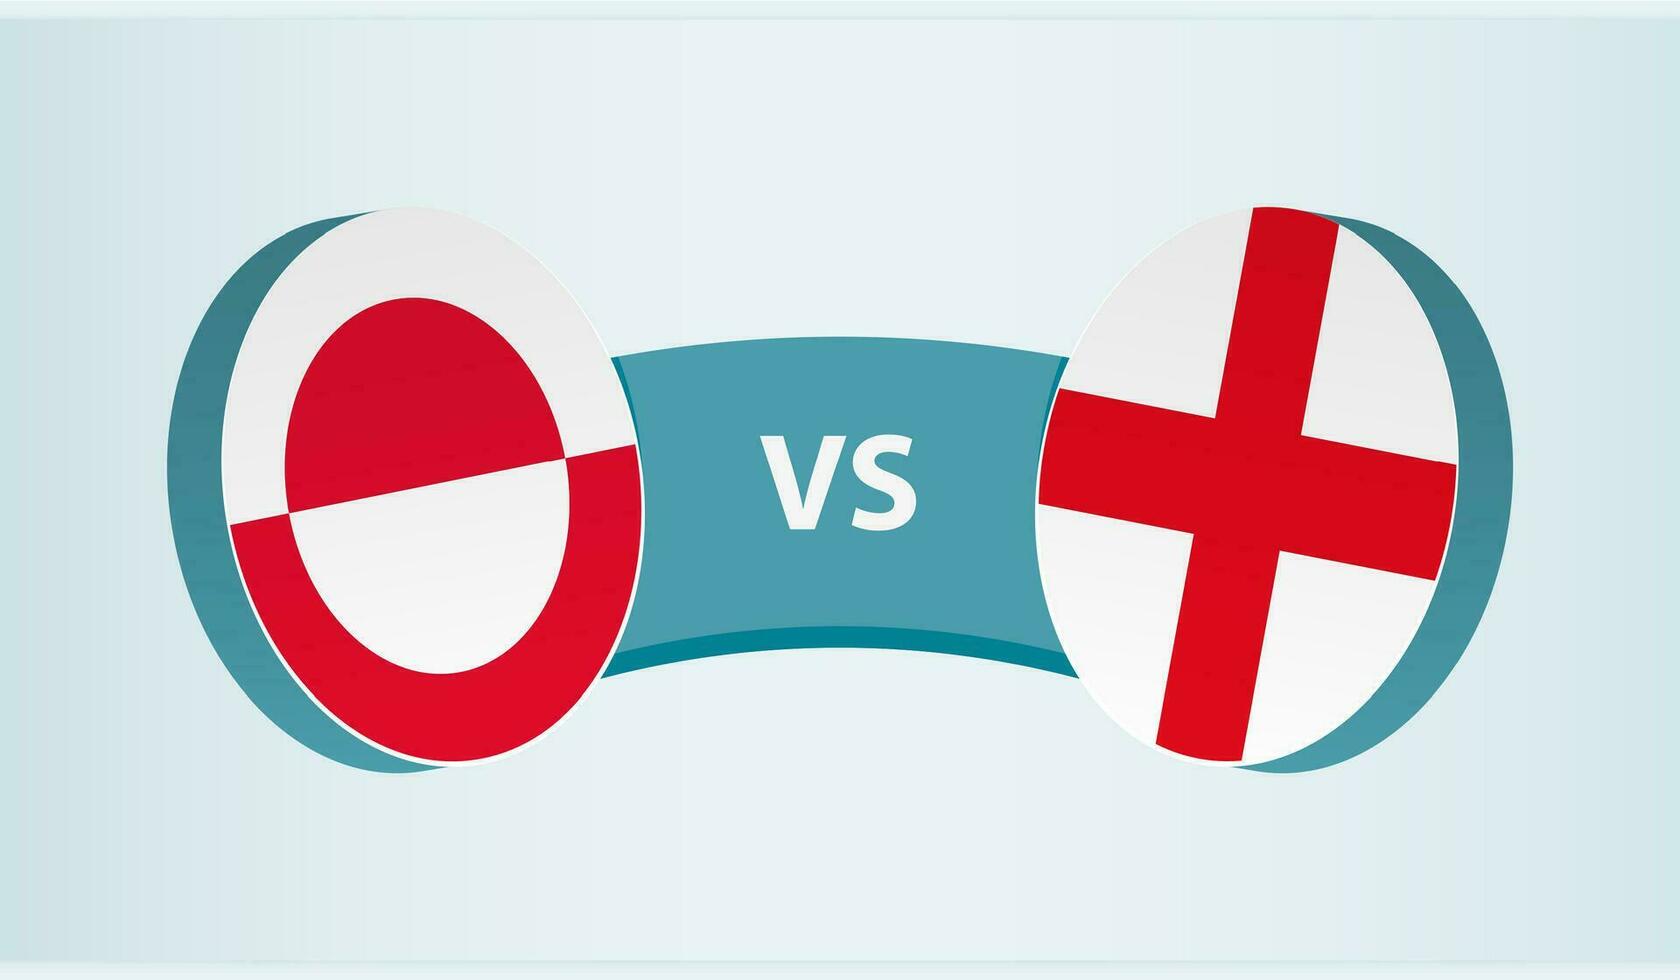 Groenlândia versus Inglaterra, equipe Esportes concorrência conceito. vetor